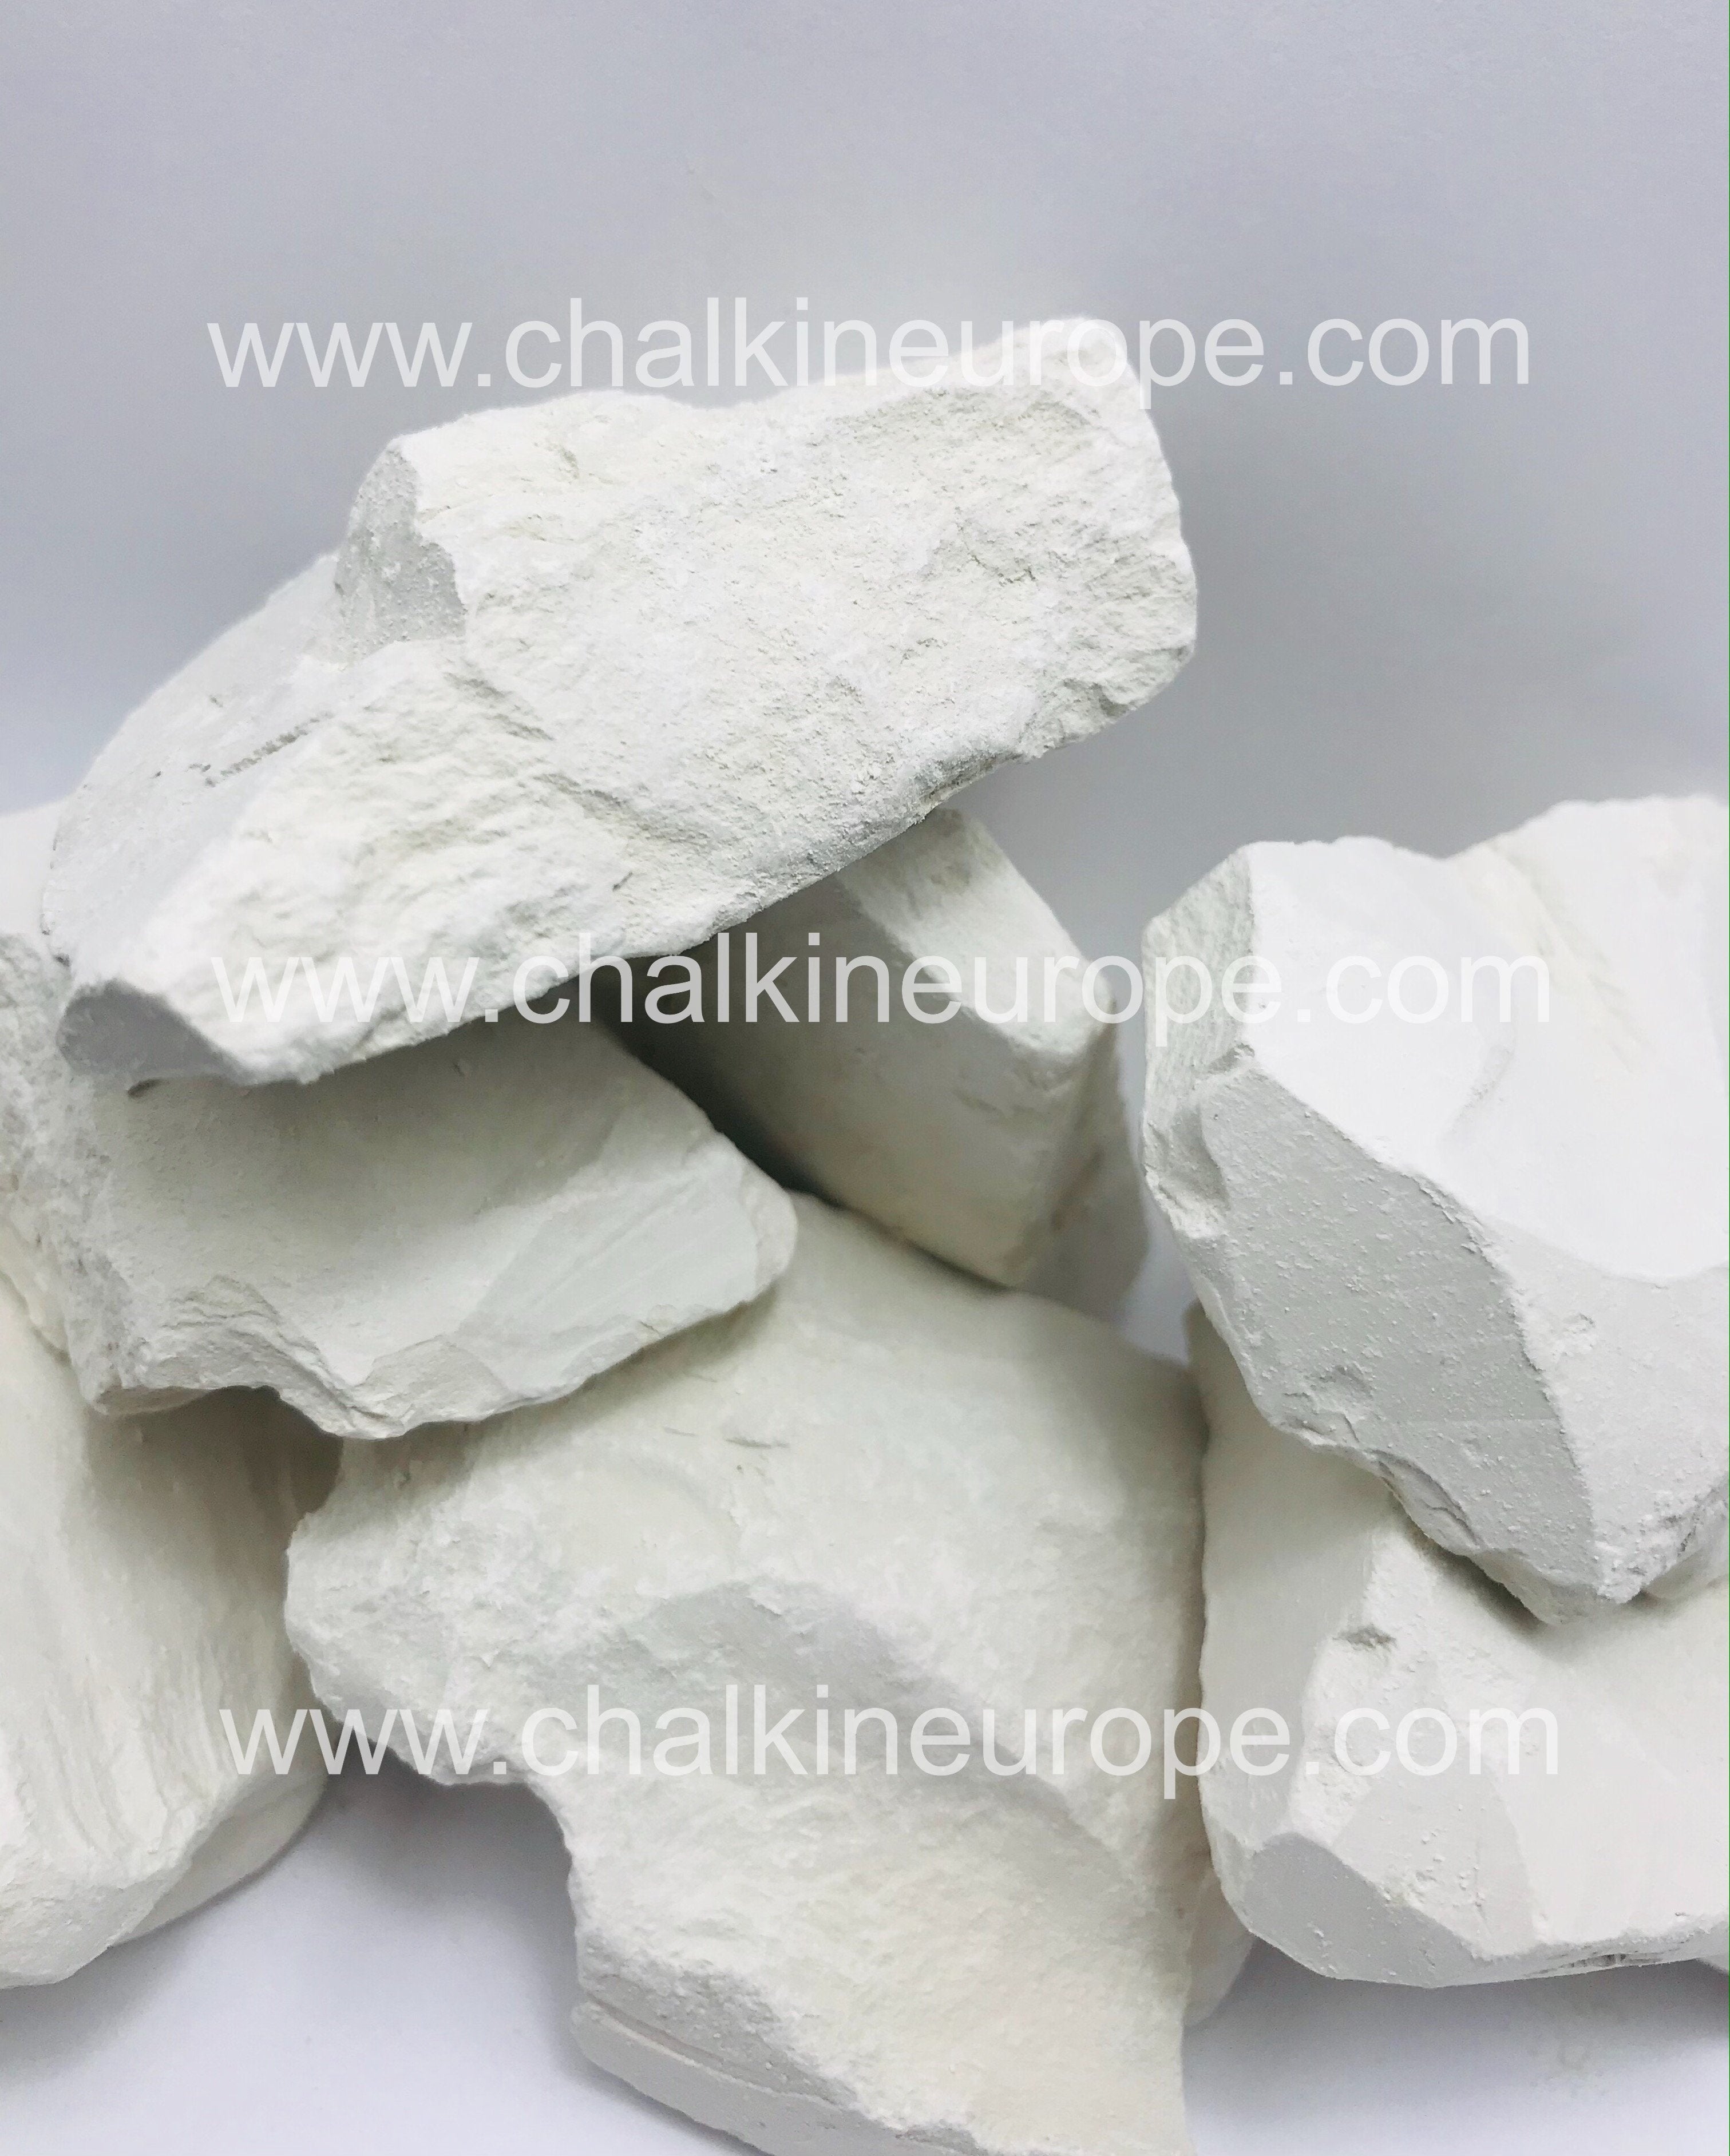 Edible White Clay - Chalkineurope